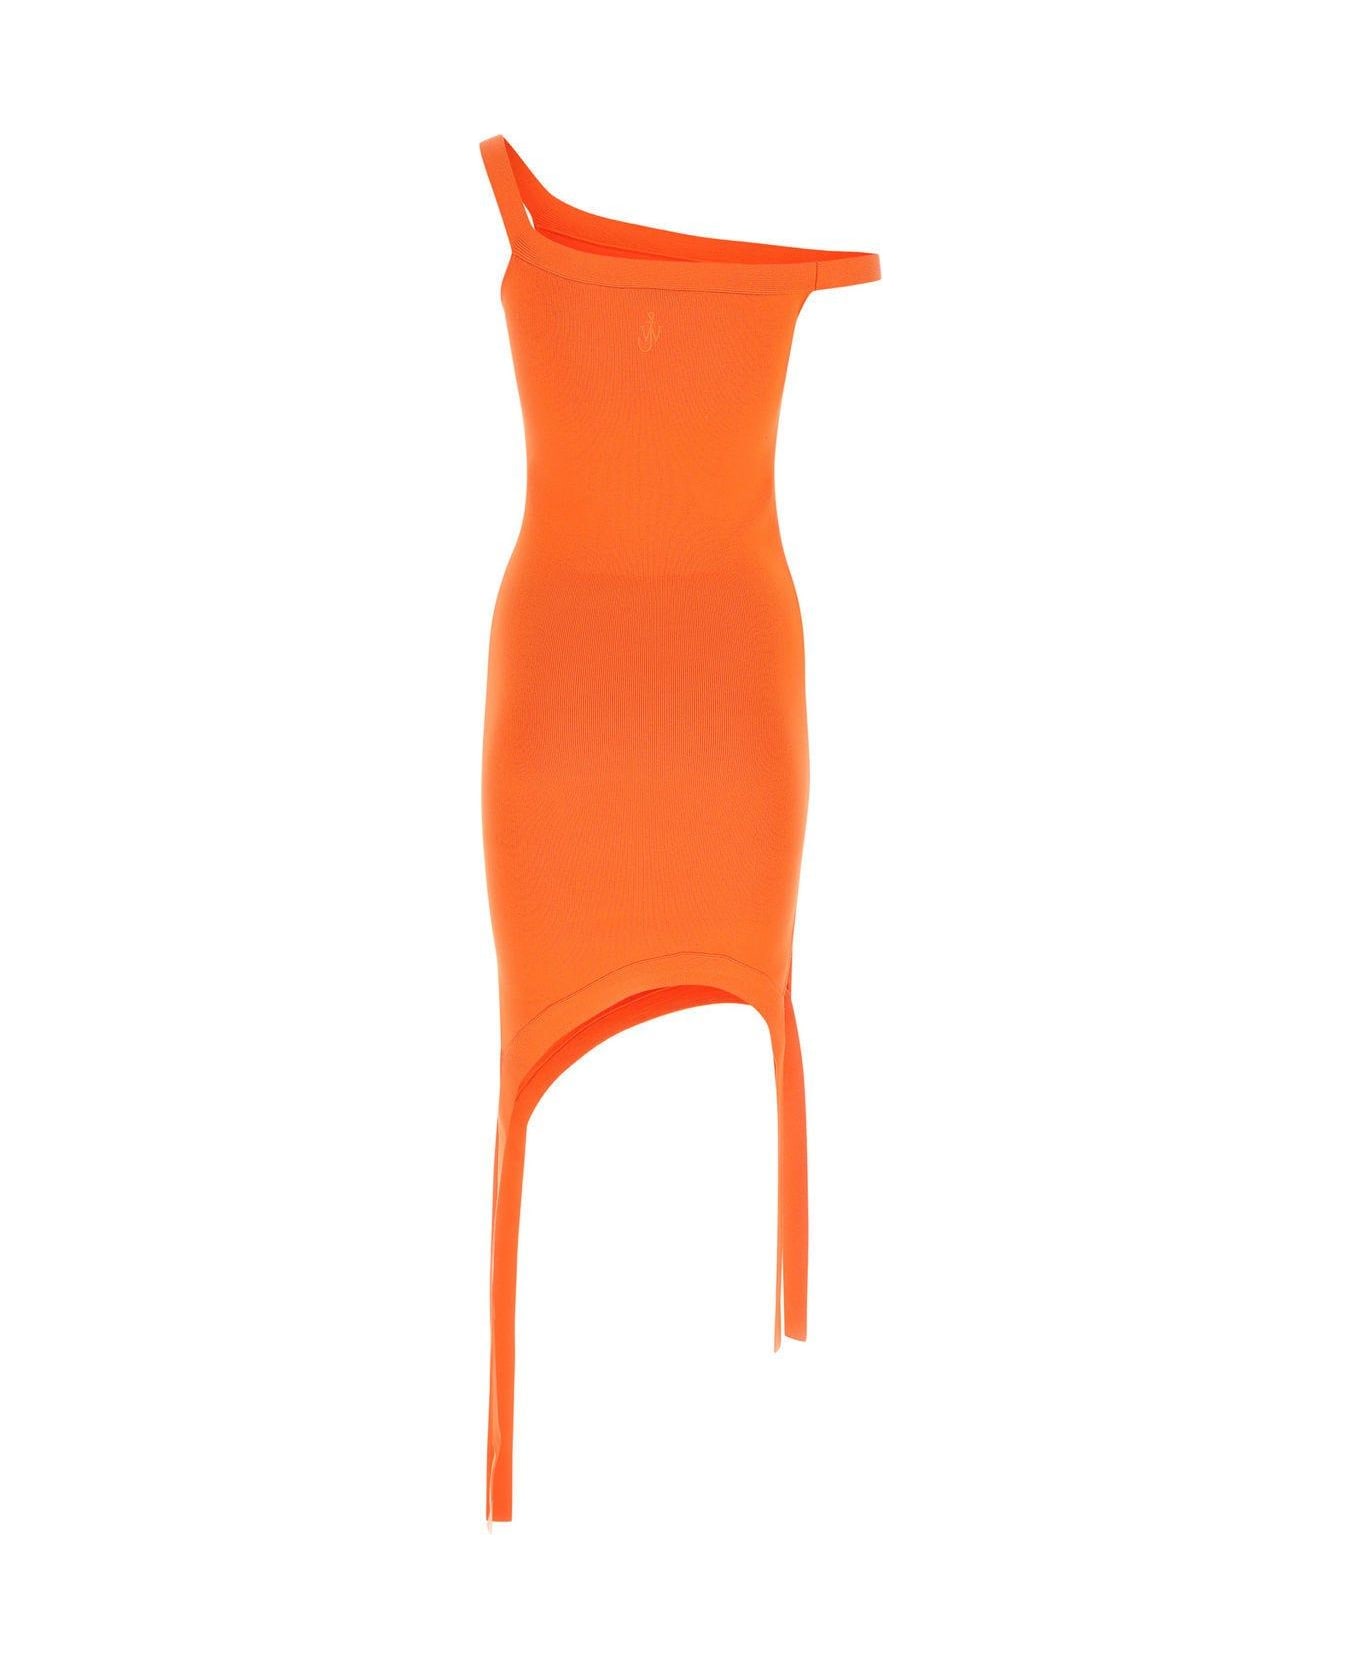 J.W. Anderson Orange Stretch Polyester Blend Mini Dress - ORANGE